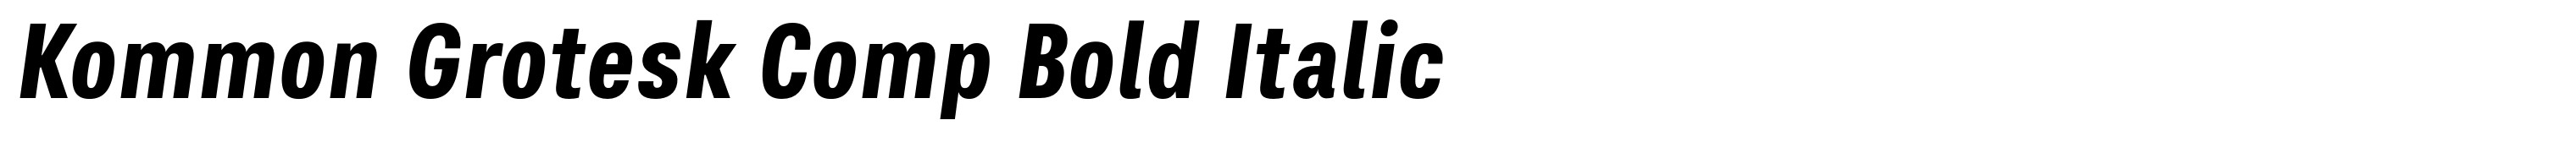 Kommon Grotesk Comp Bold Italic